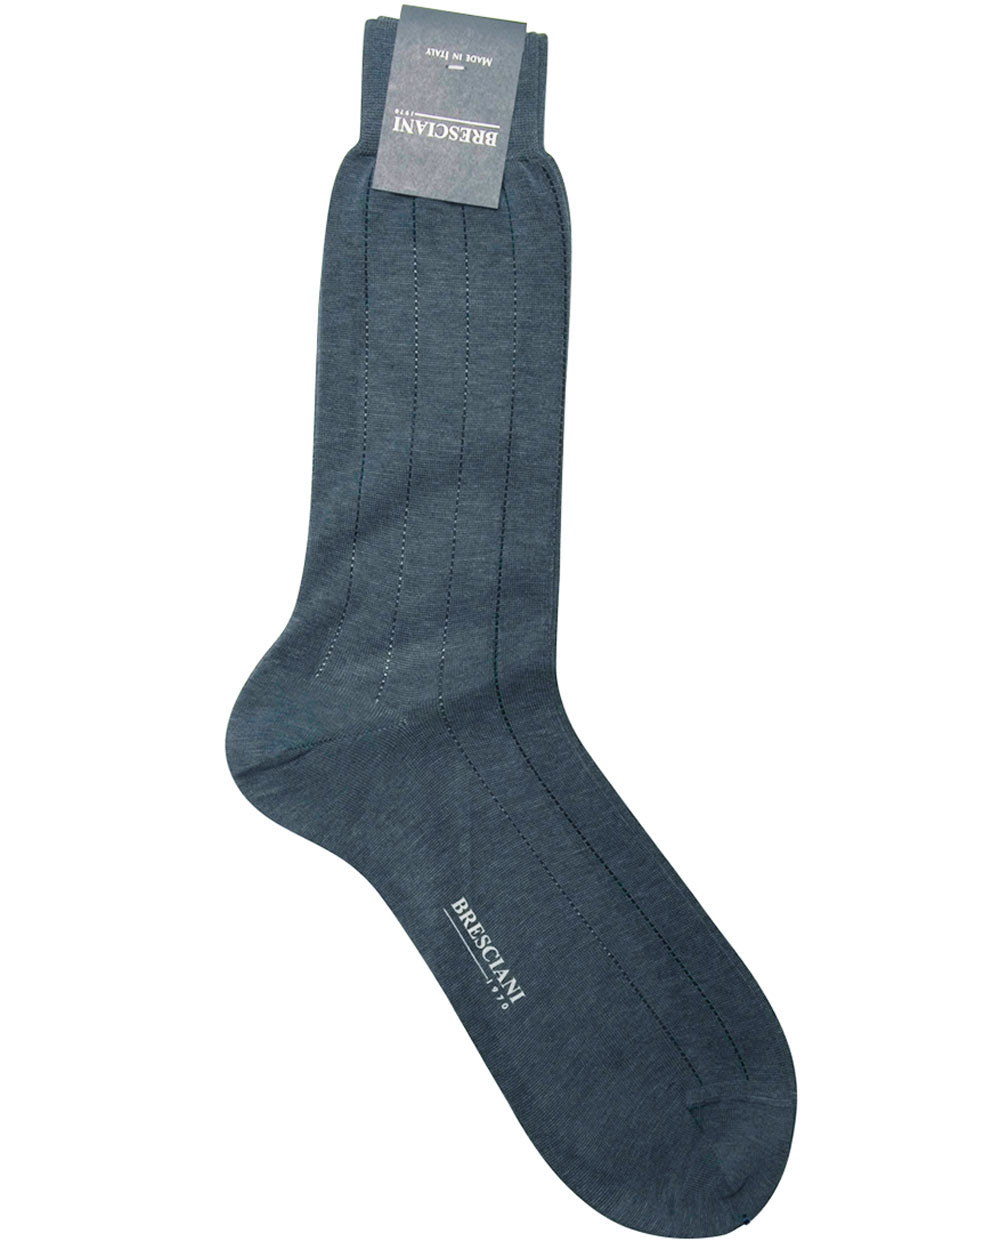 Blue and Black Hidden Pinstripe Midcalf Sock